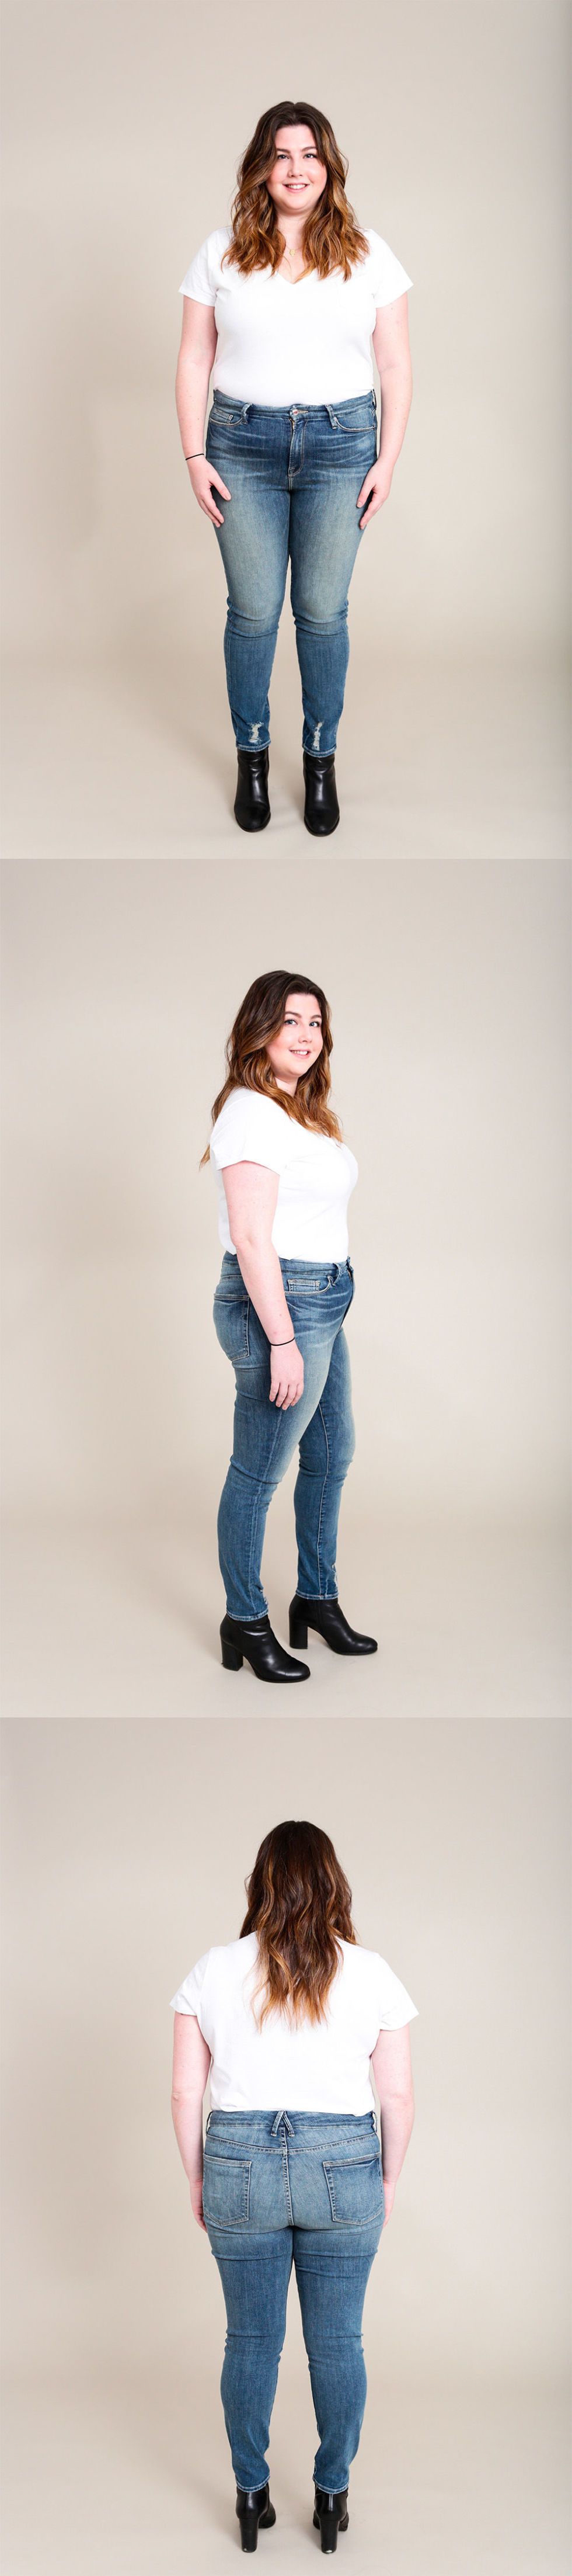 jeans size 14 waist